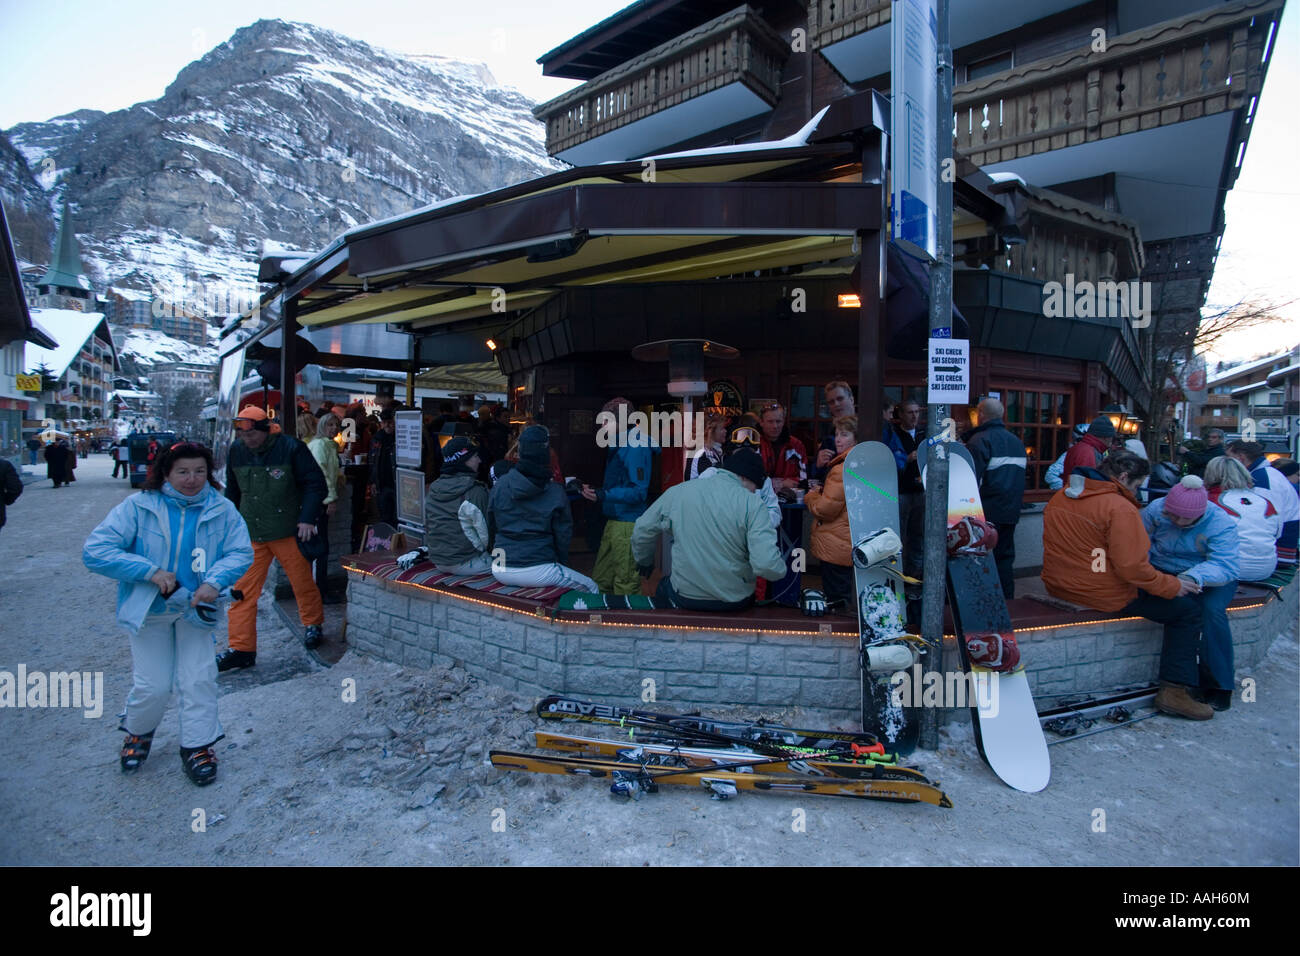 Apres ski Party by ByTaCk on DeviantArt